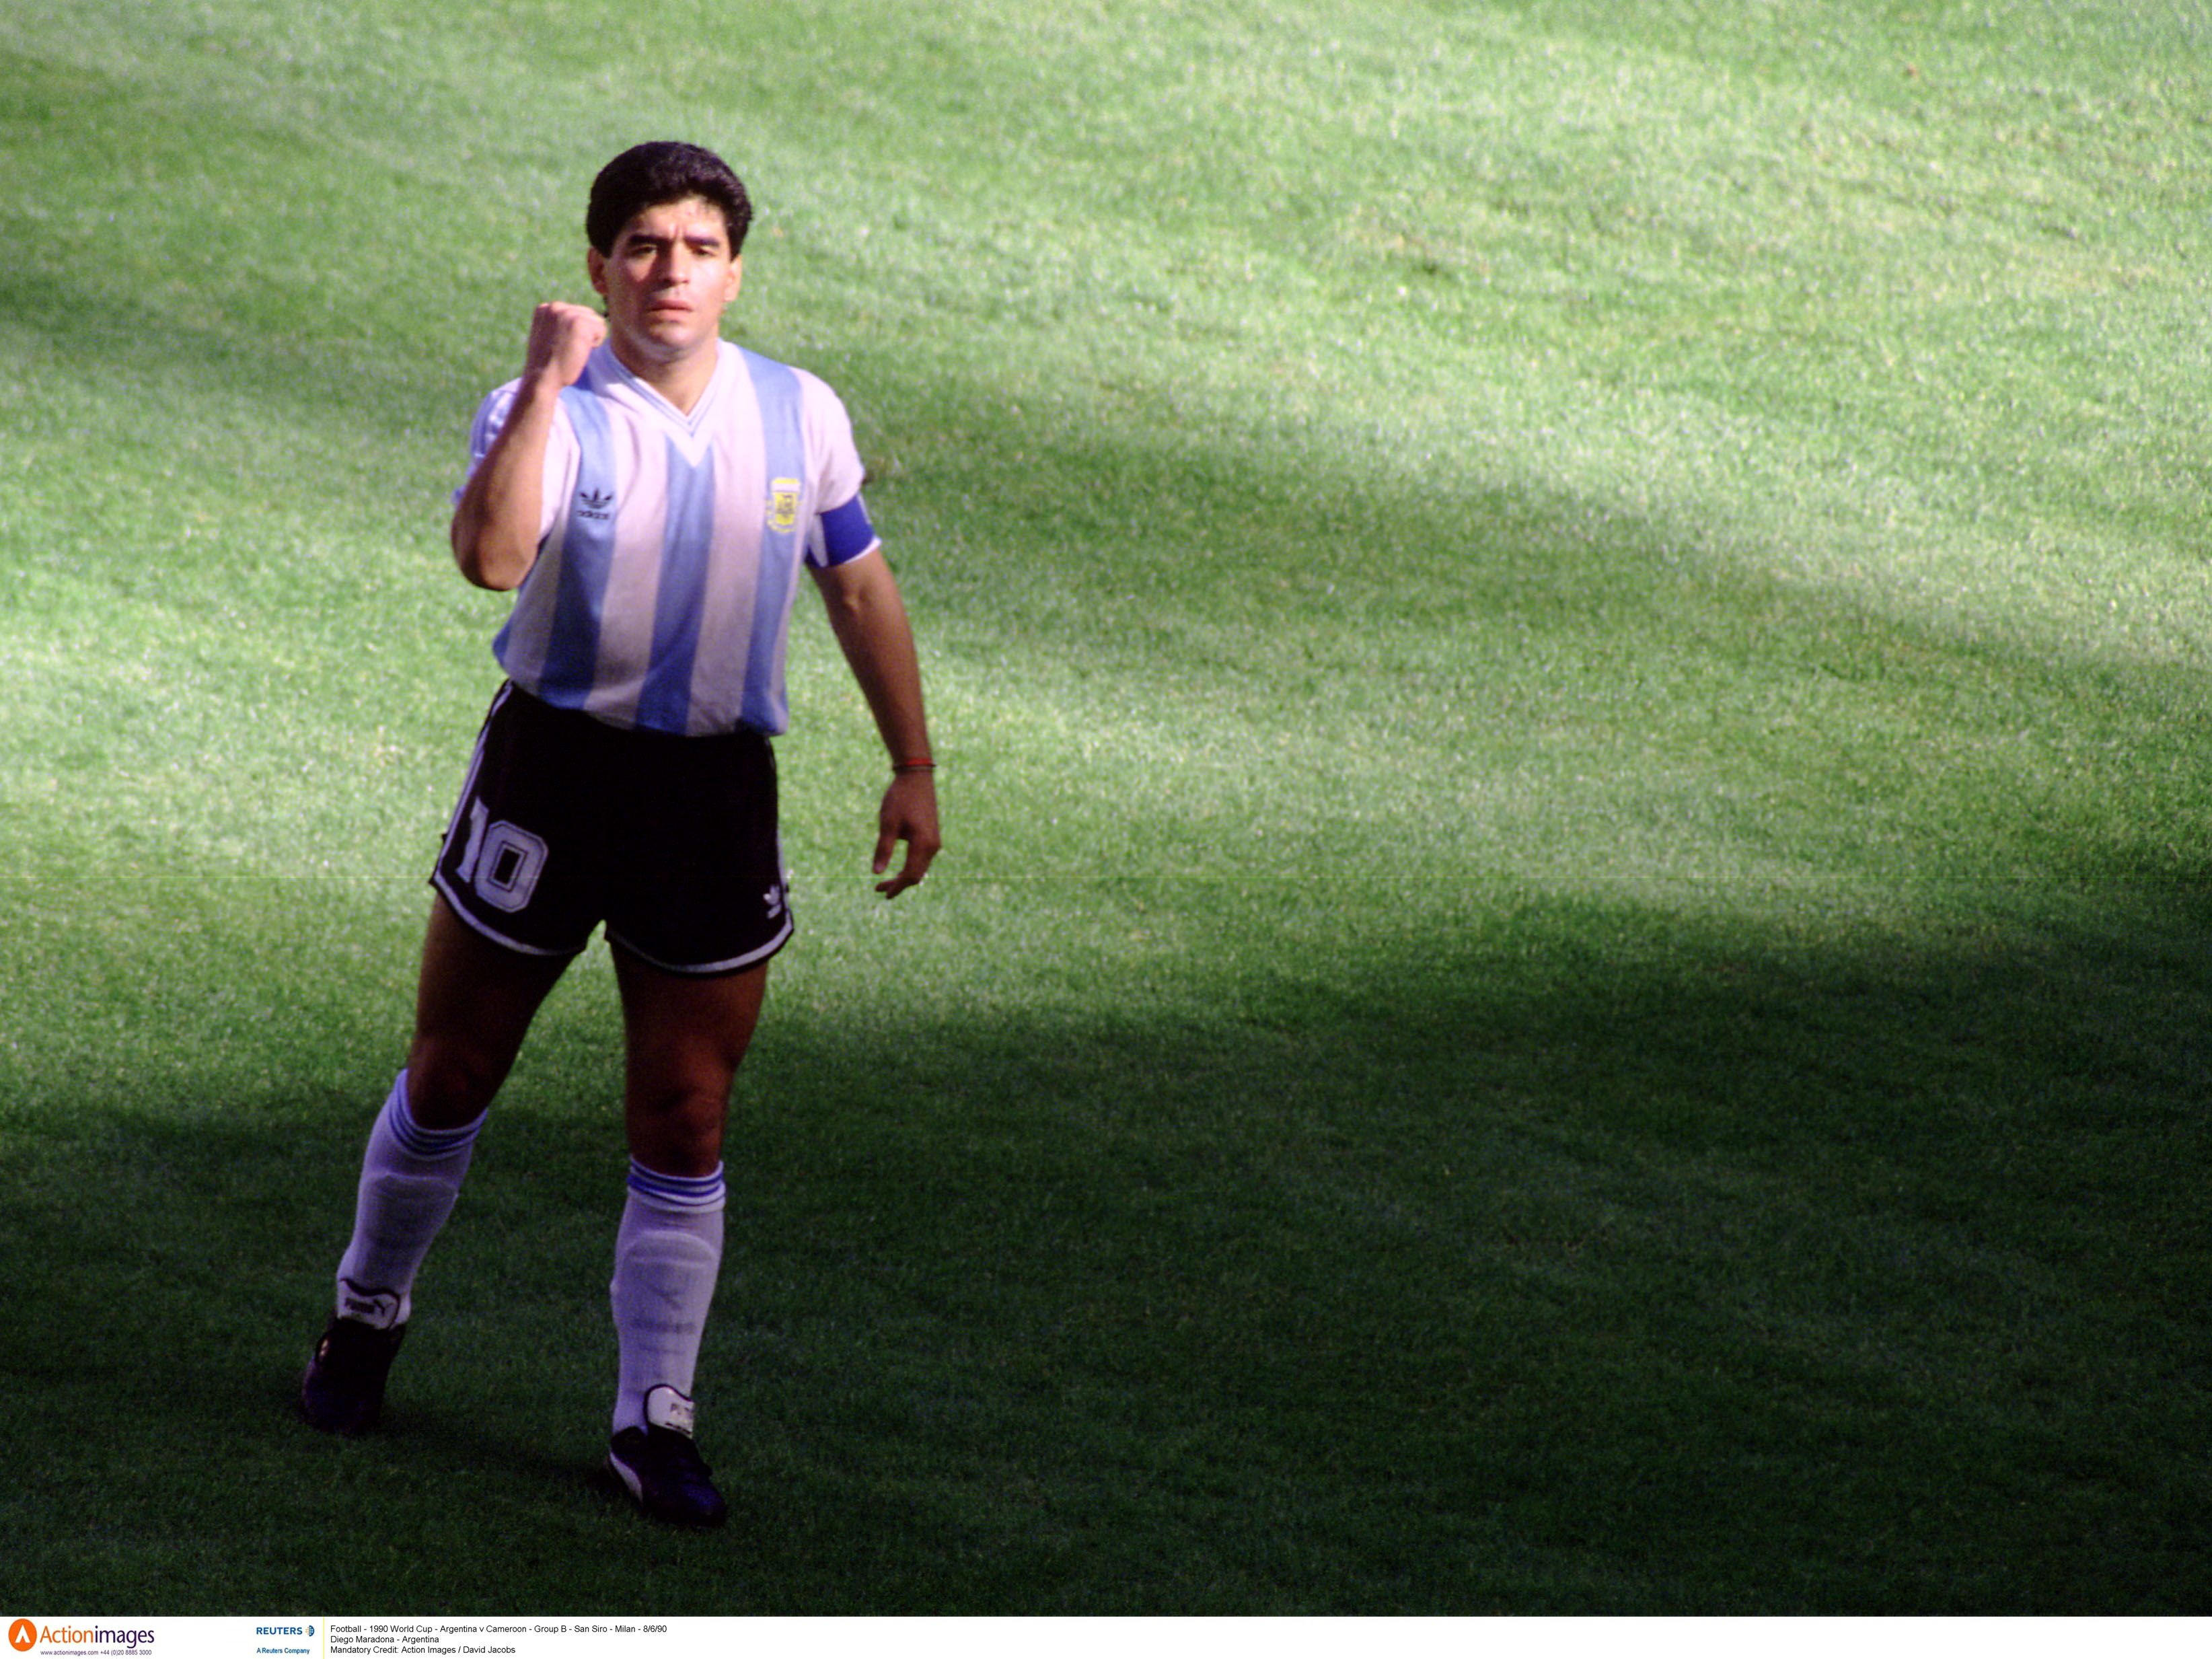 Diego Maradona at the 1990 World Cup